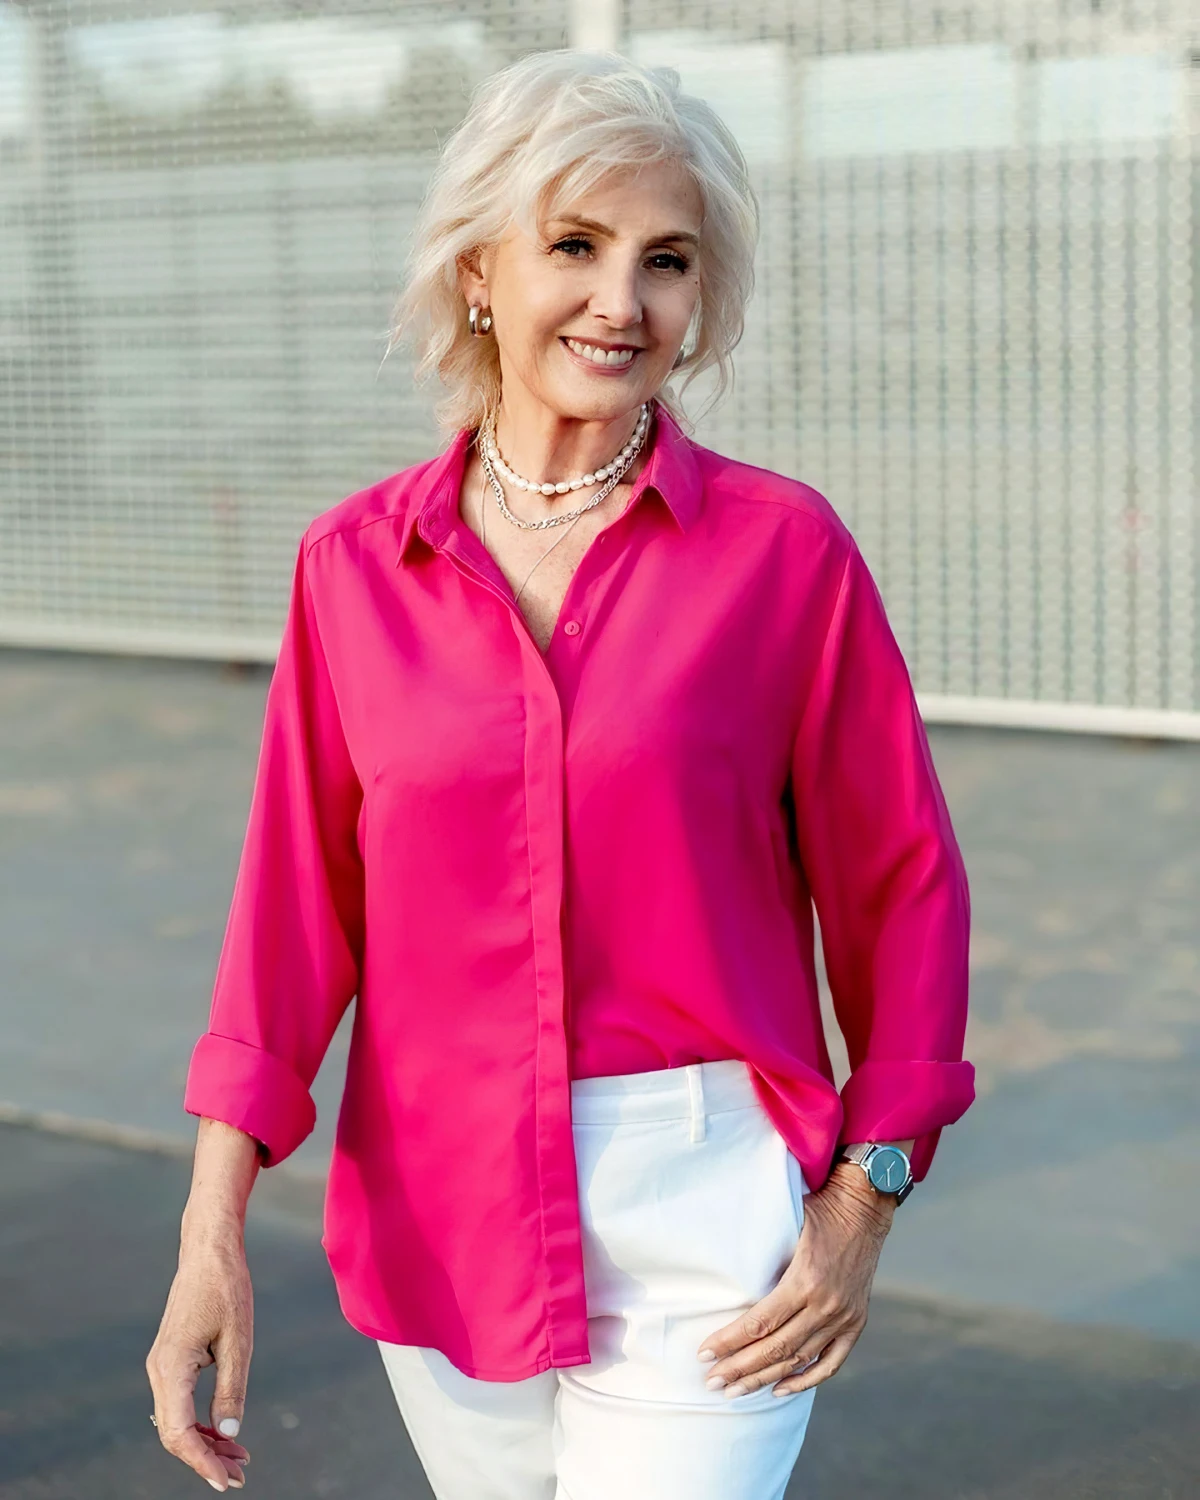 tenue rajeunissante top rose jean blanc mode femme 60 ans